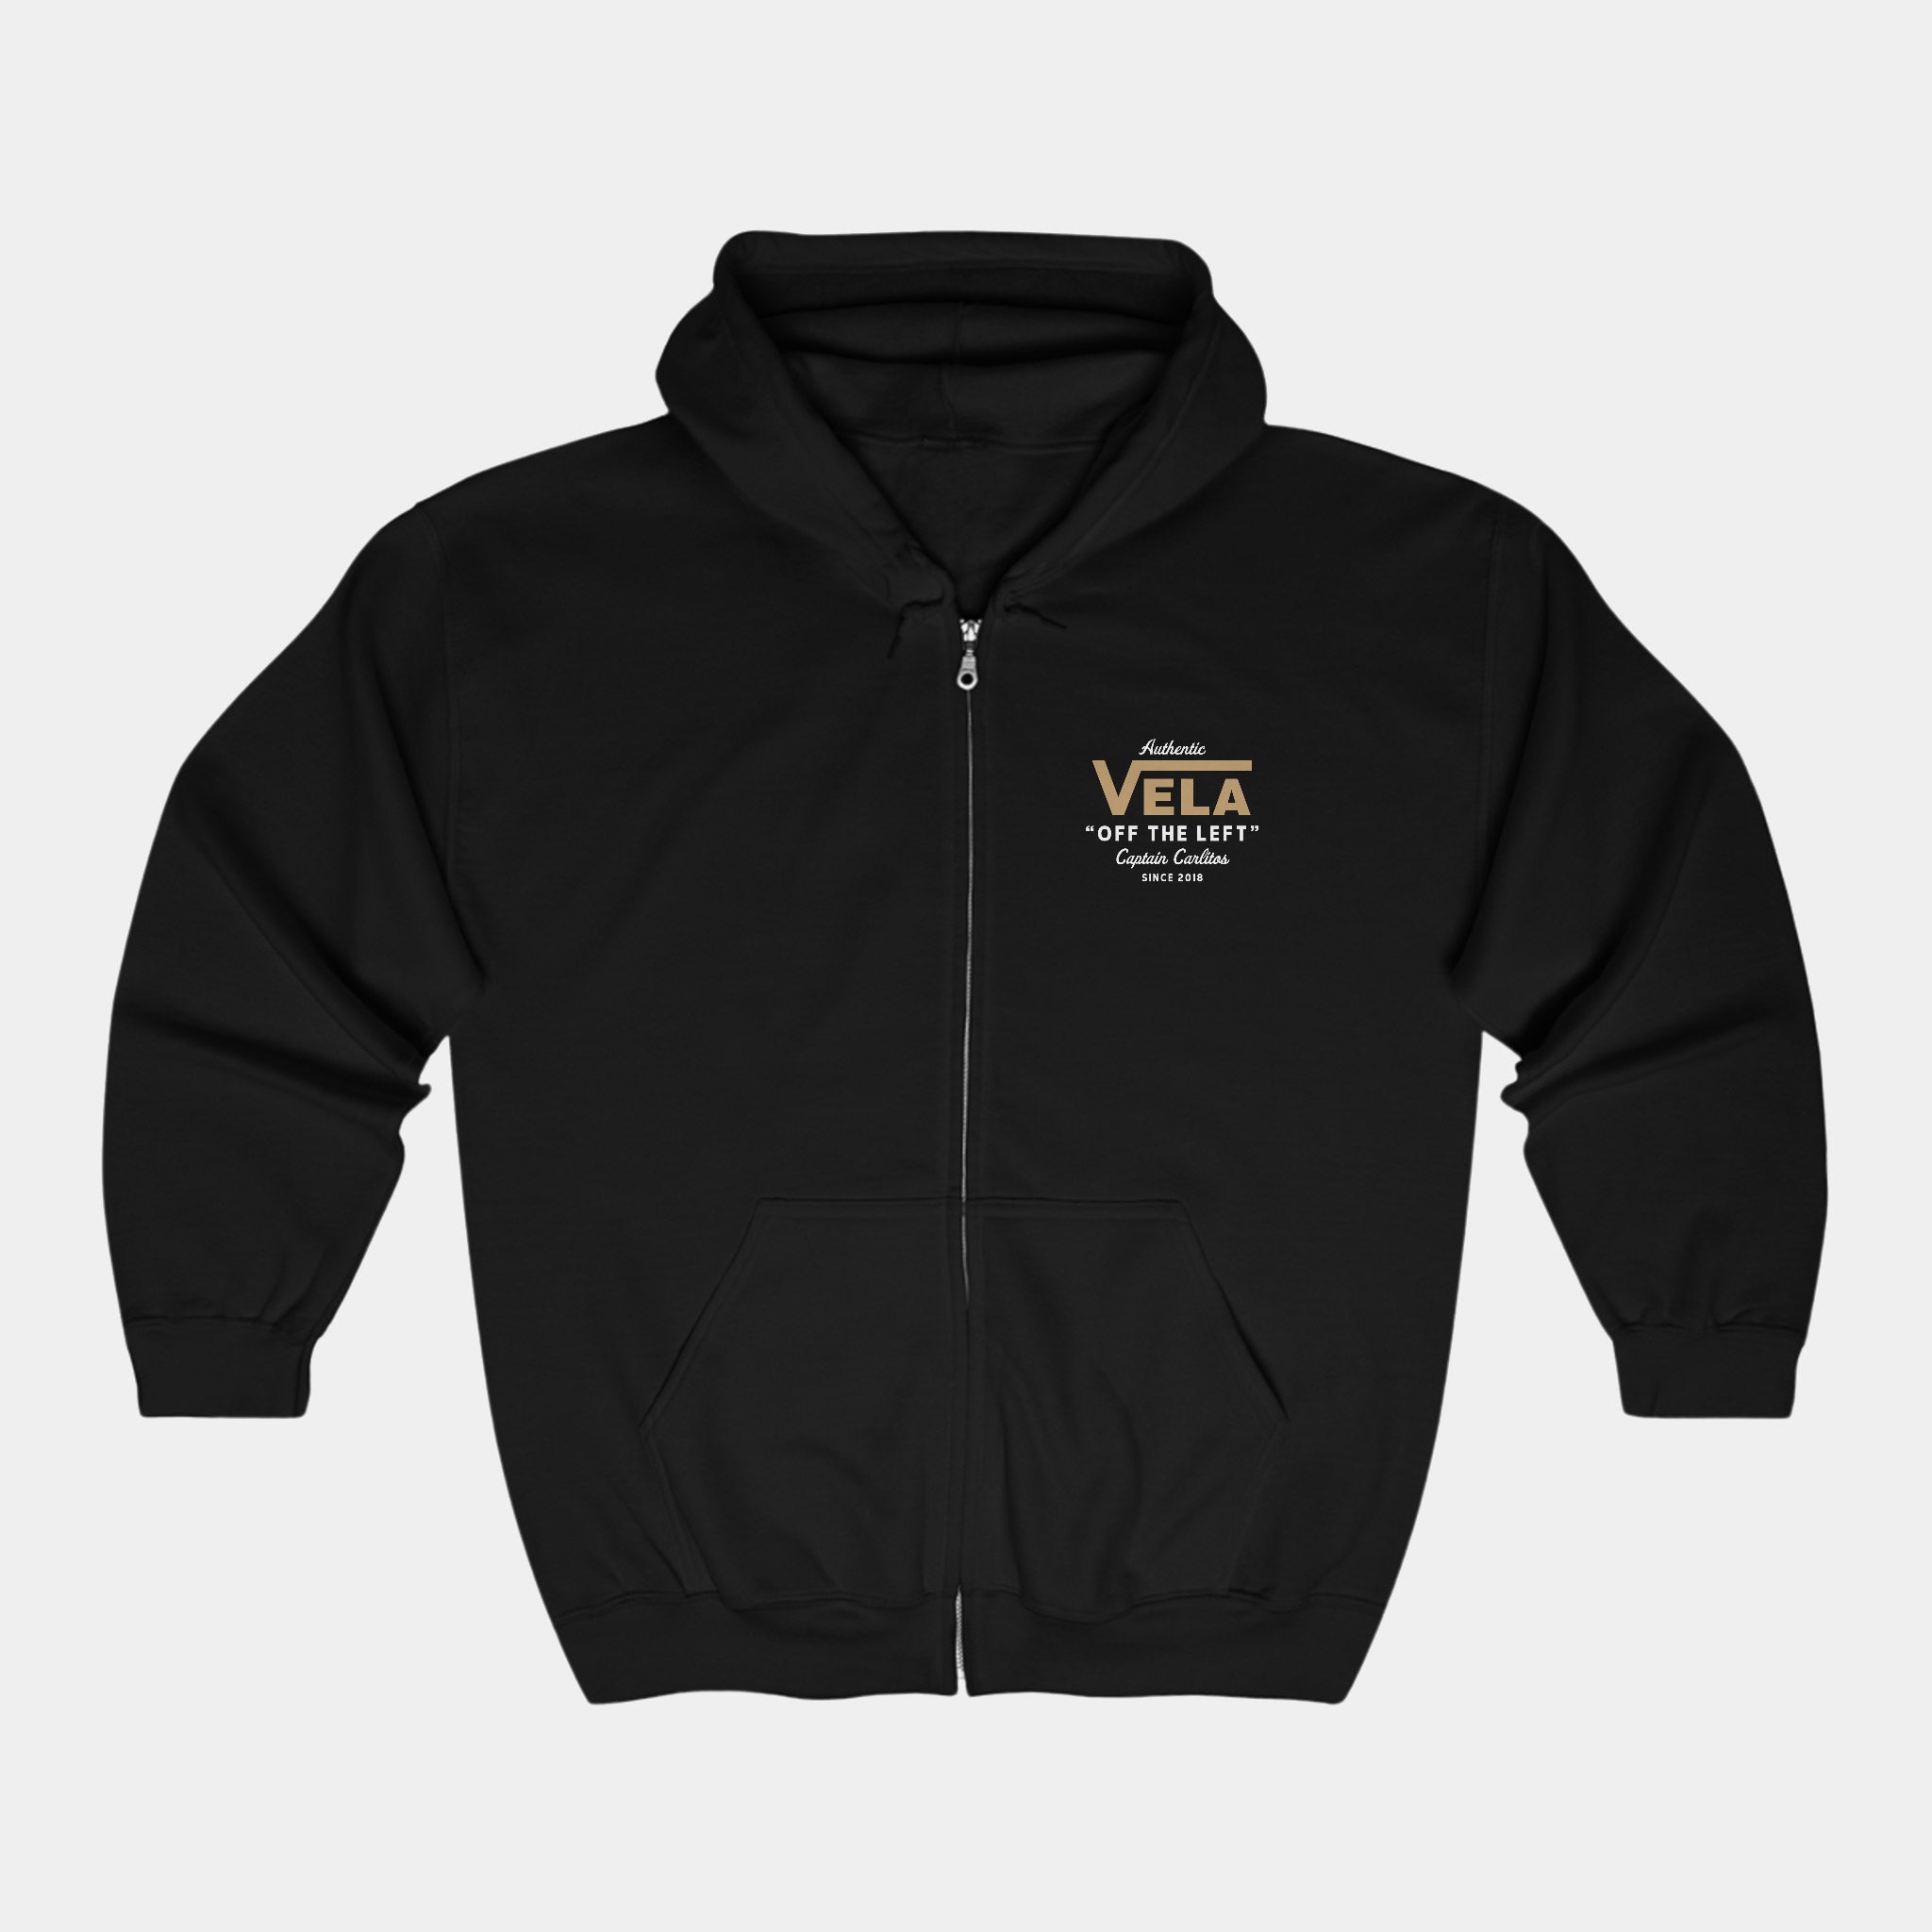 Authentic Vela "Off the Left" (LAFC) Zip-up Hooded Sweatshirt